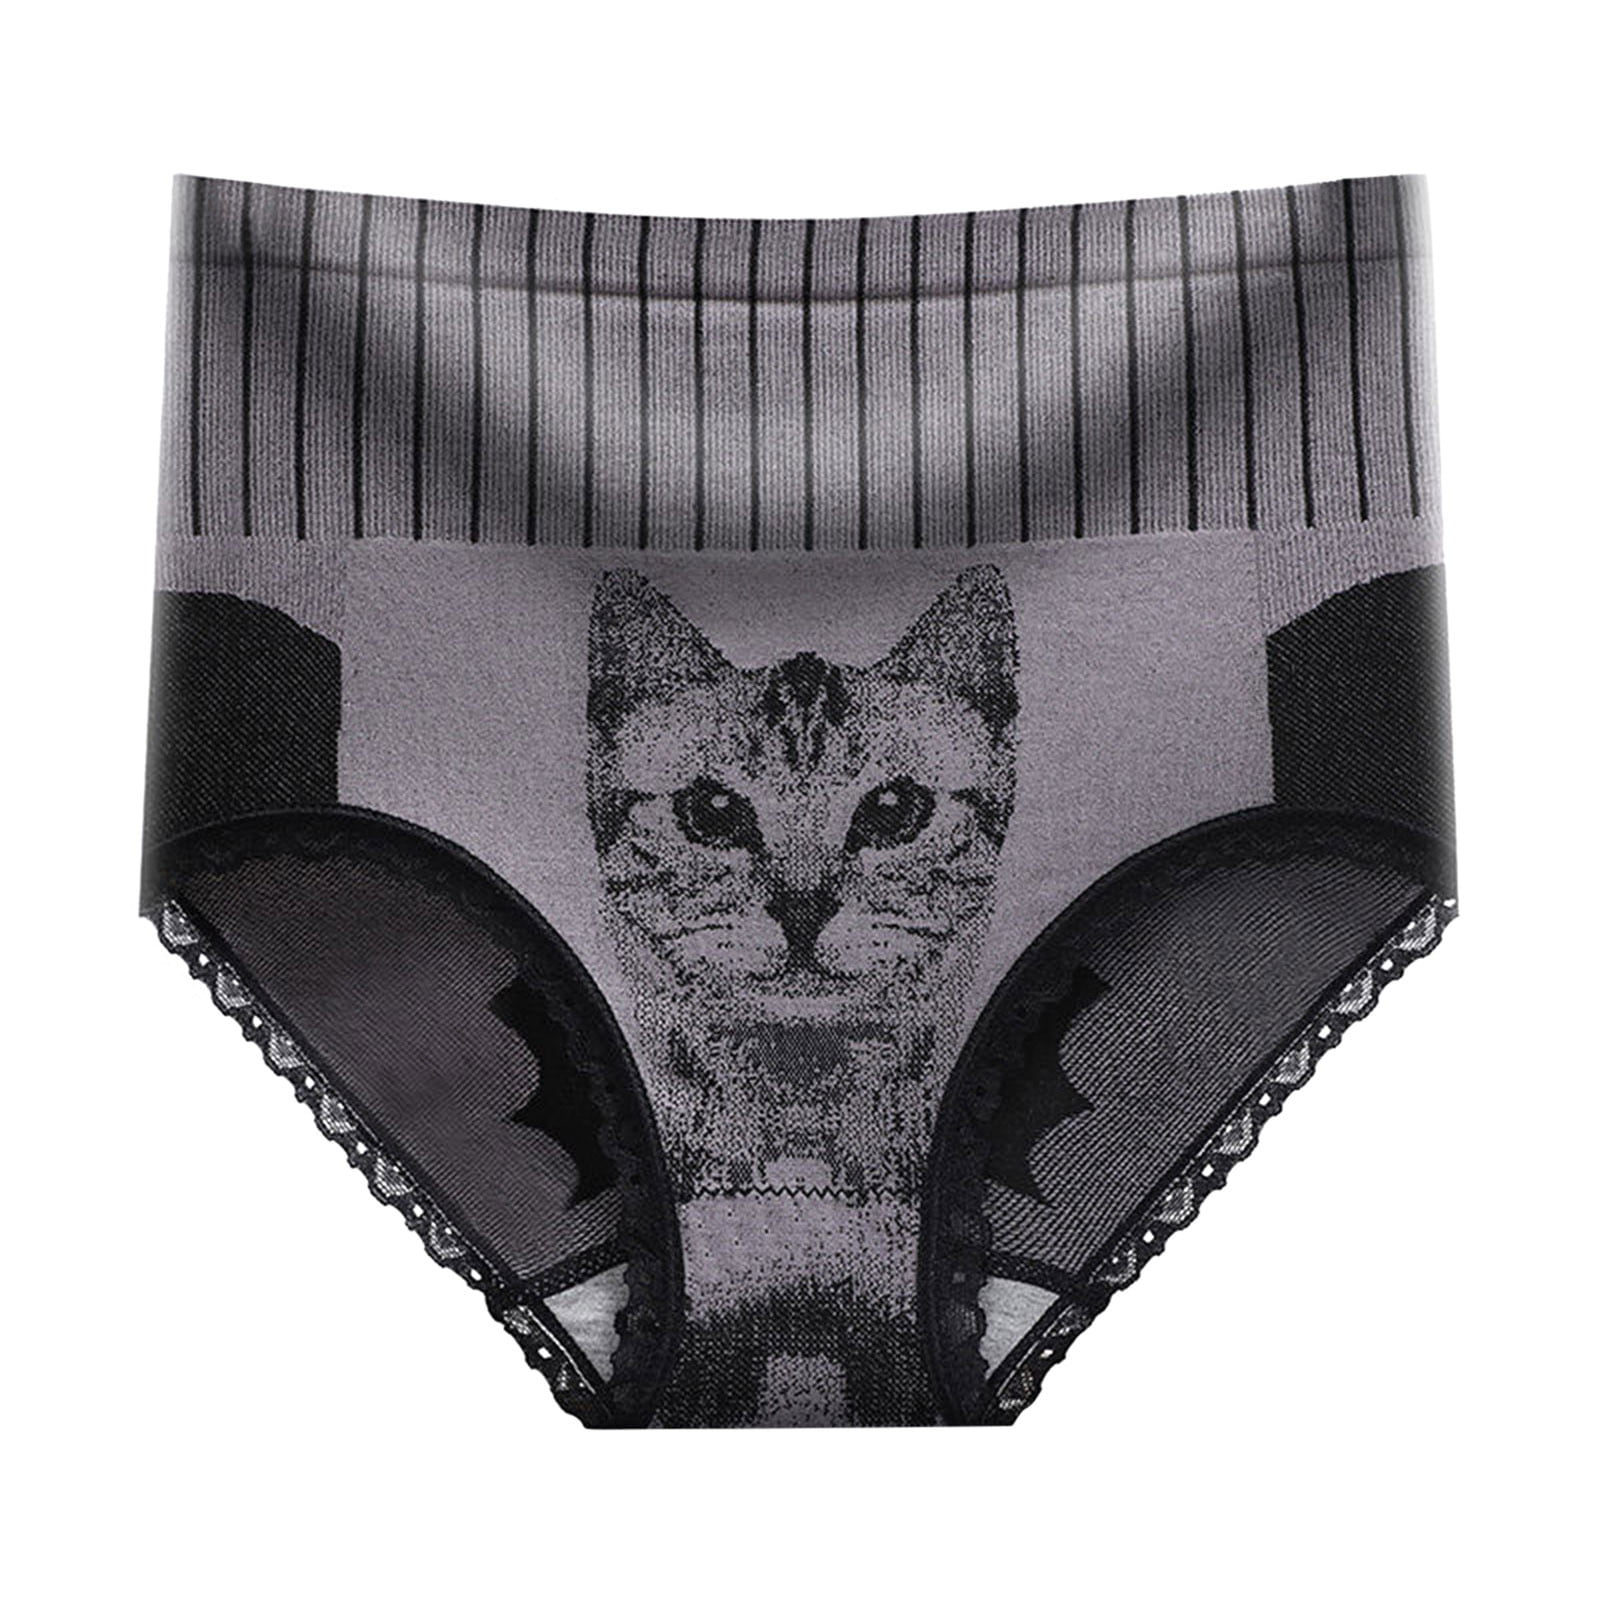 vbnergoie Women Ladies Cat Head Printed High Waist Lace Panties Underwear  Women Boxers Hankies Cotton Women 